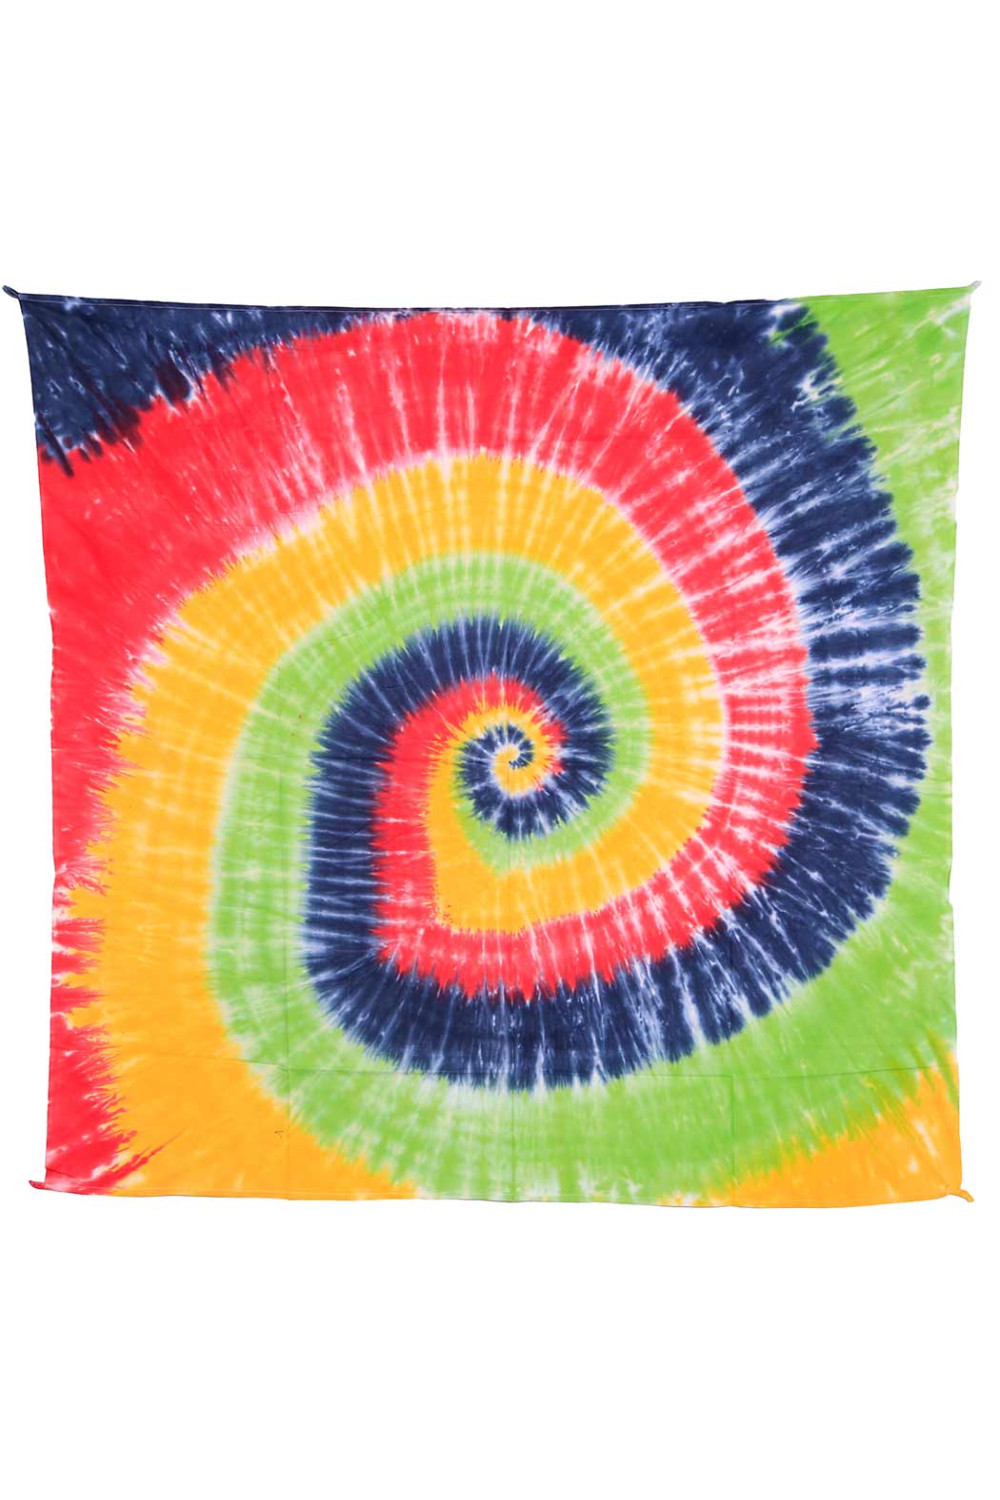 Rasta Spiral Tie-Dye Tapestry 58x58 